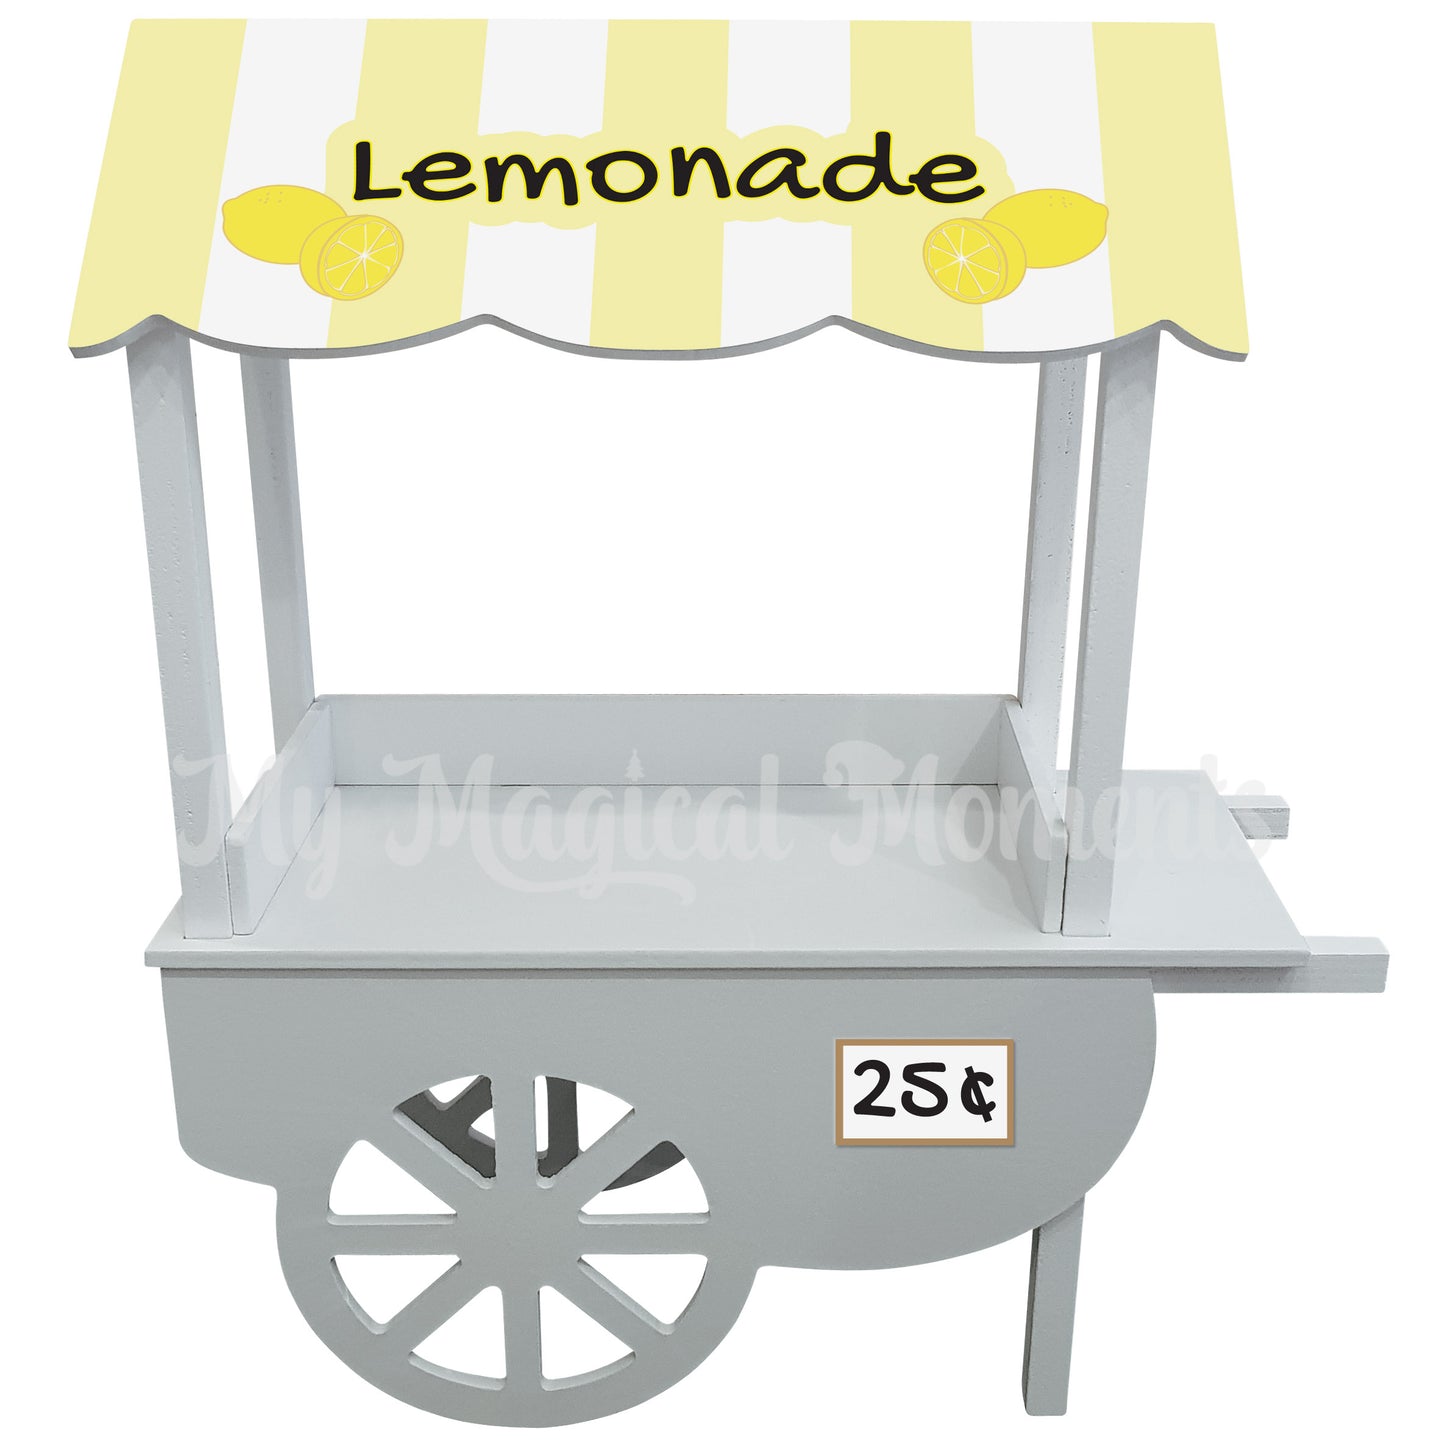 Lemonade stand elf printable